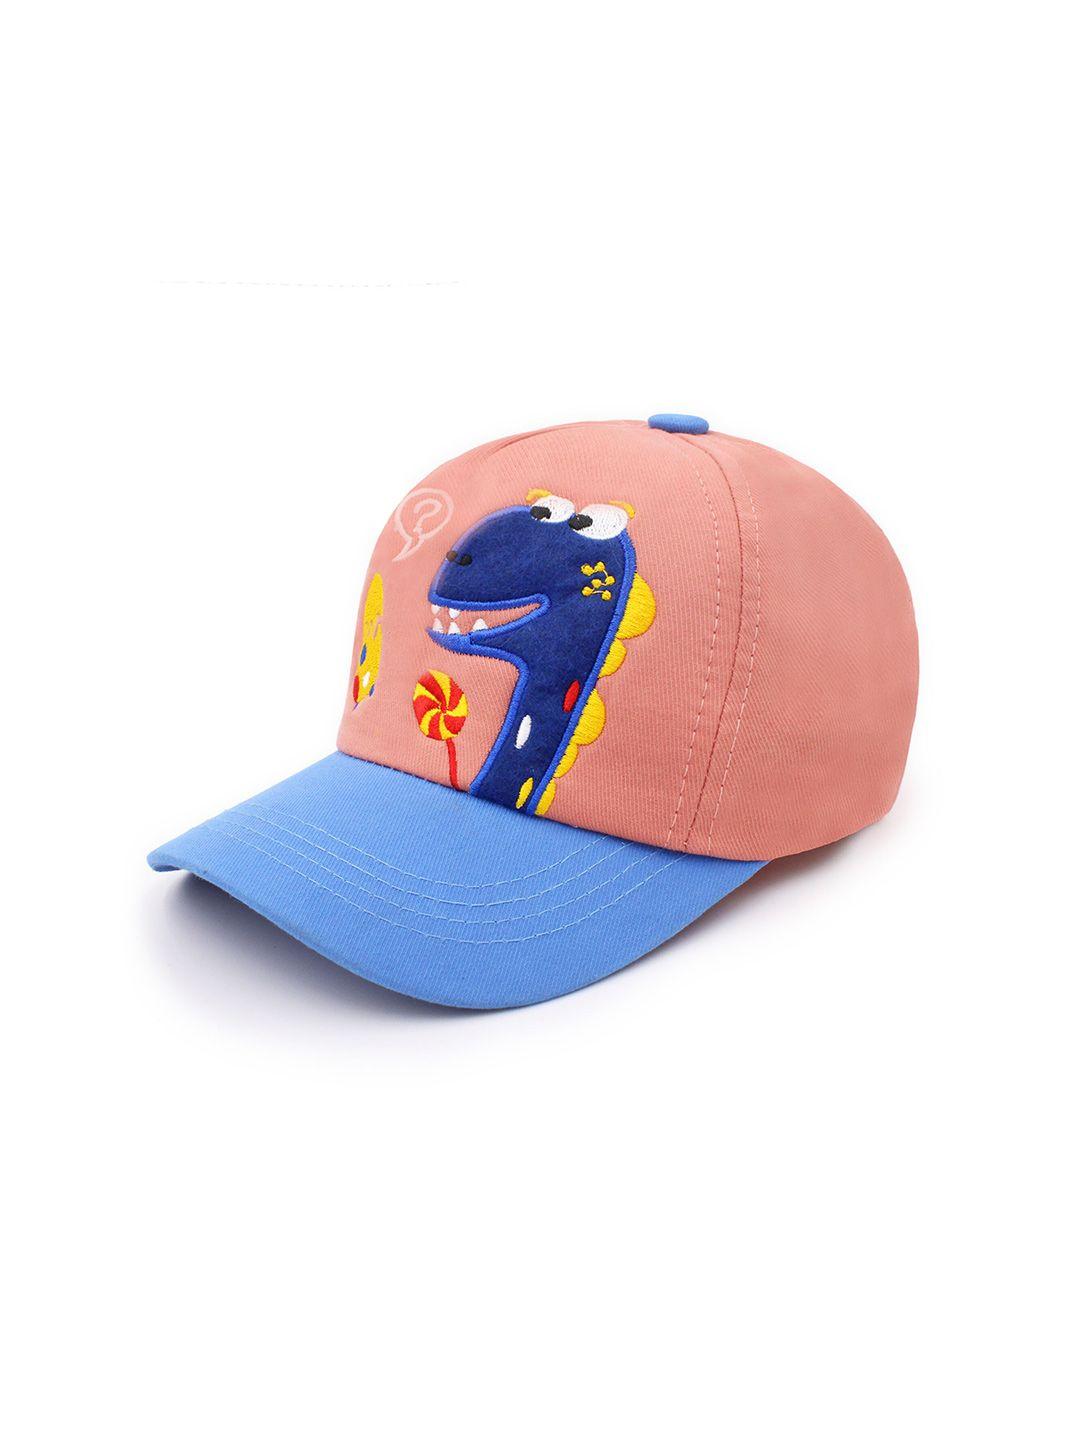 jenna kids embroidered baseball cap